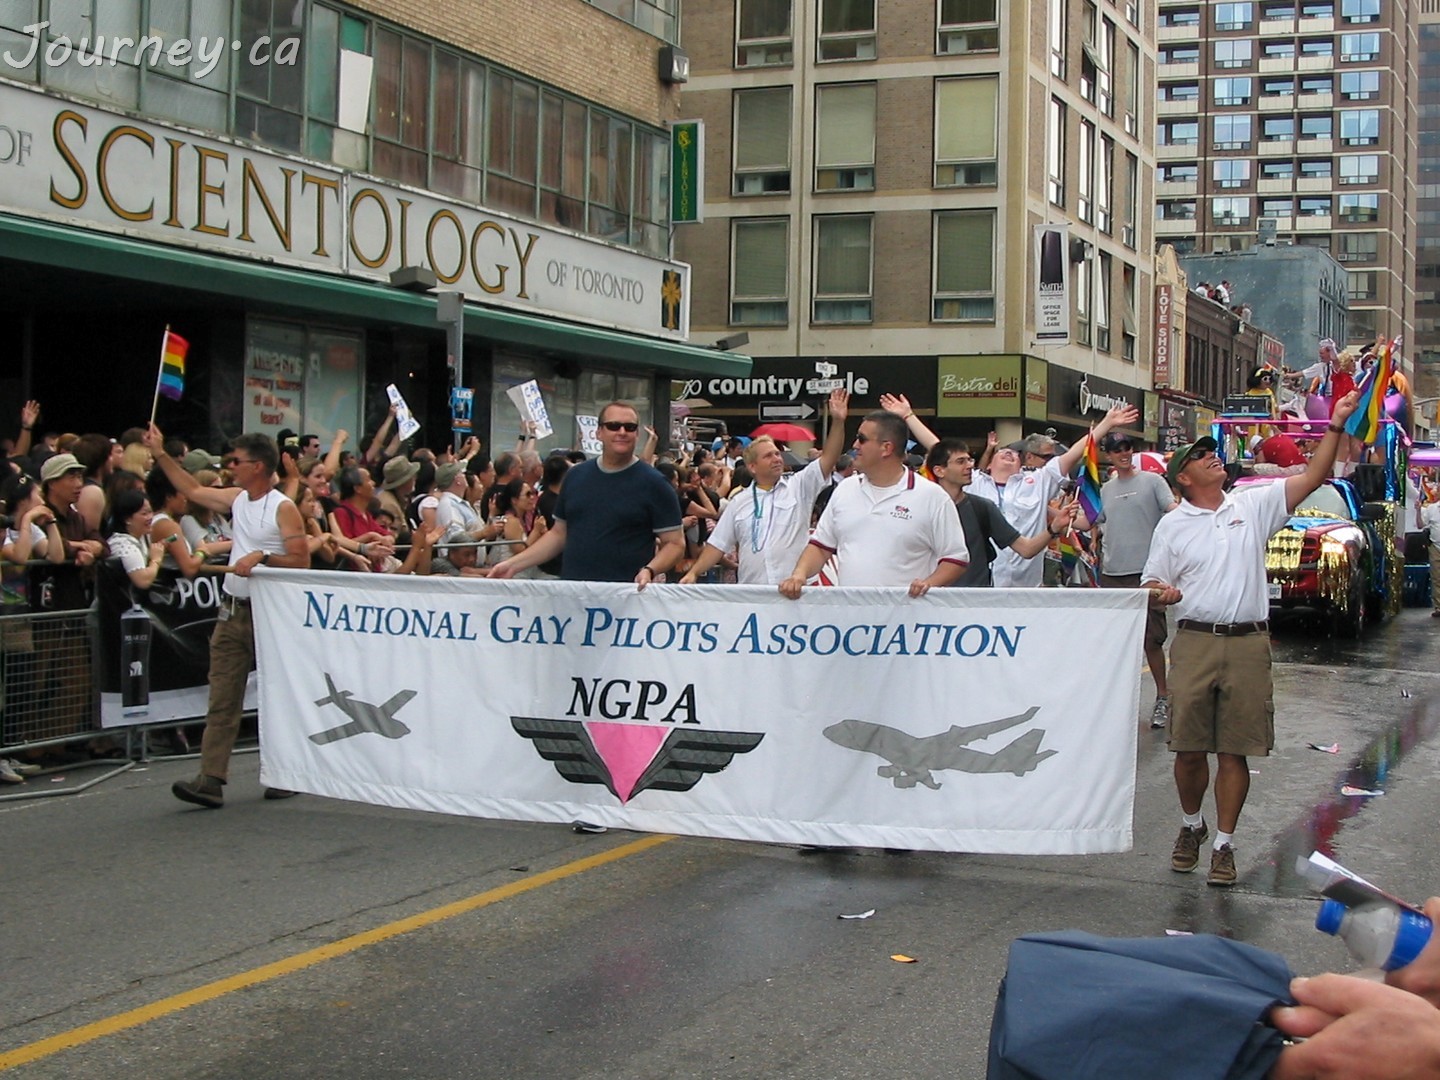 National Gay Pilot Association at Toronto Pride Parade